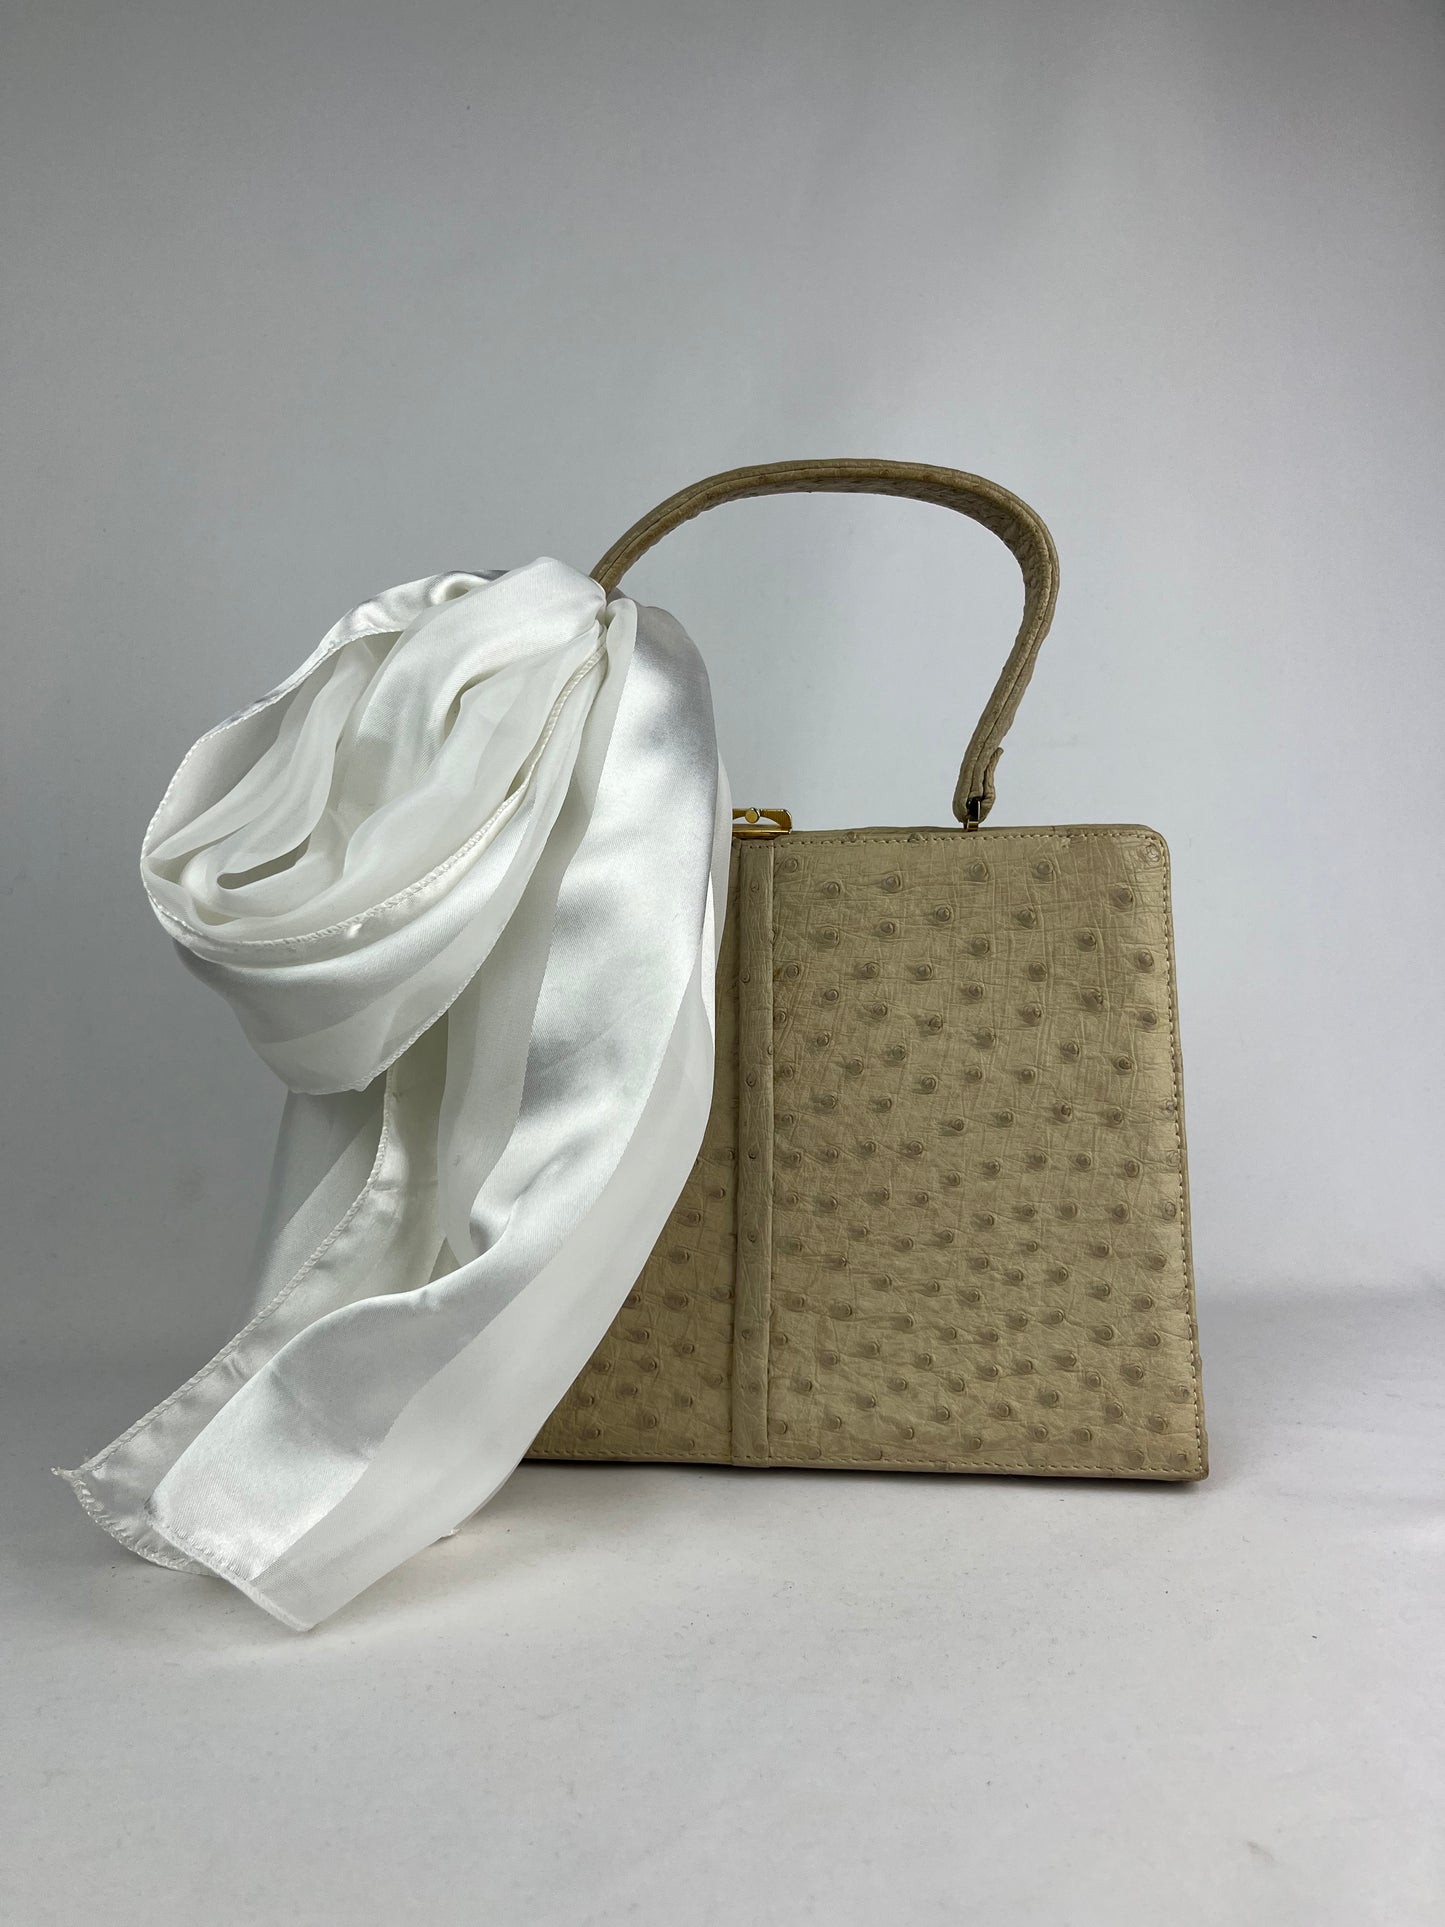 Vintage Genuine Leather Handbag by Fiorenza